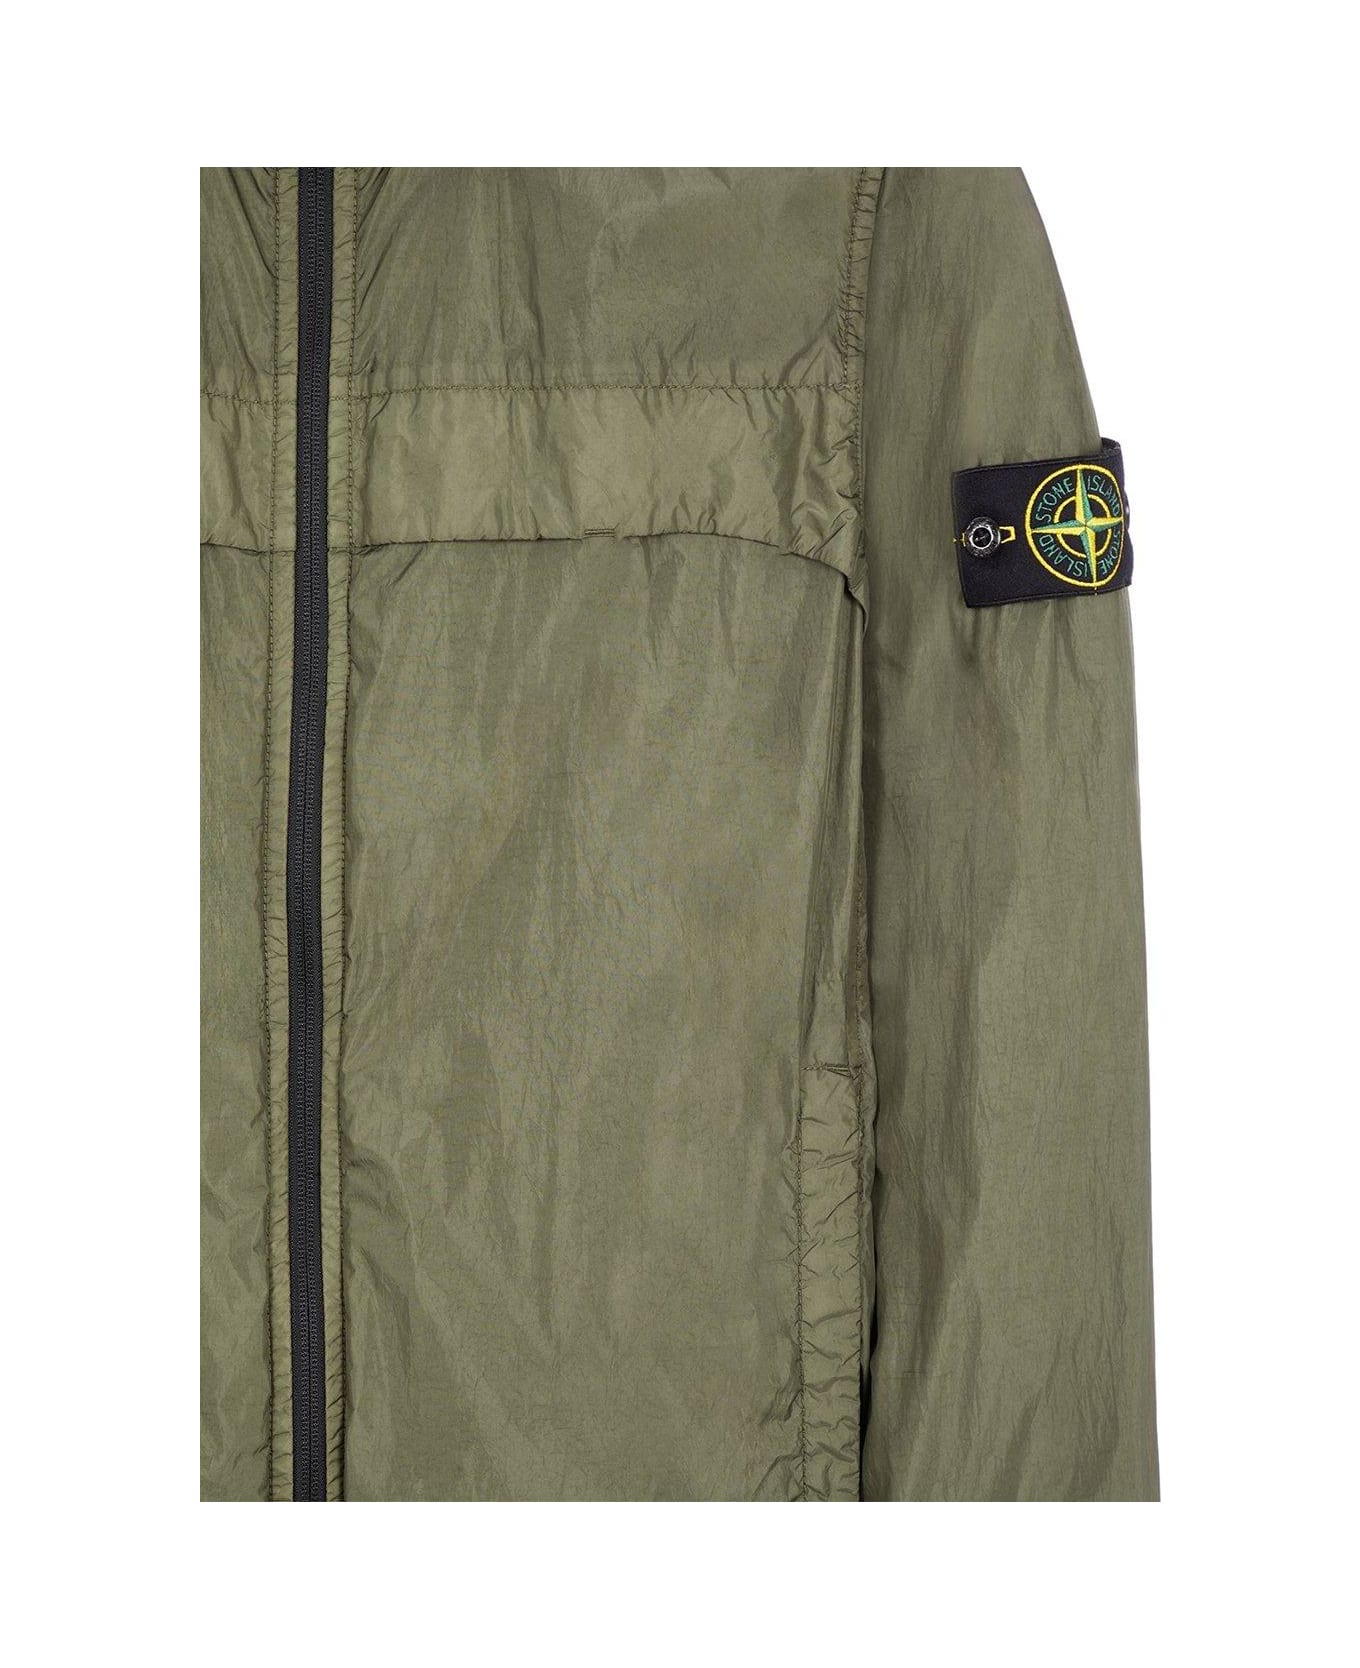 Stone Island Crinkle Reps Zipped Shirt Jacket - Verde ジャケット